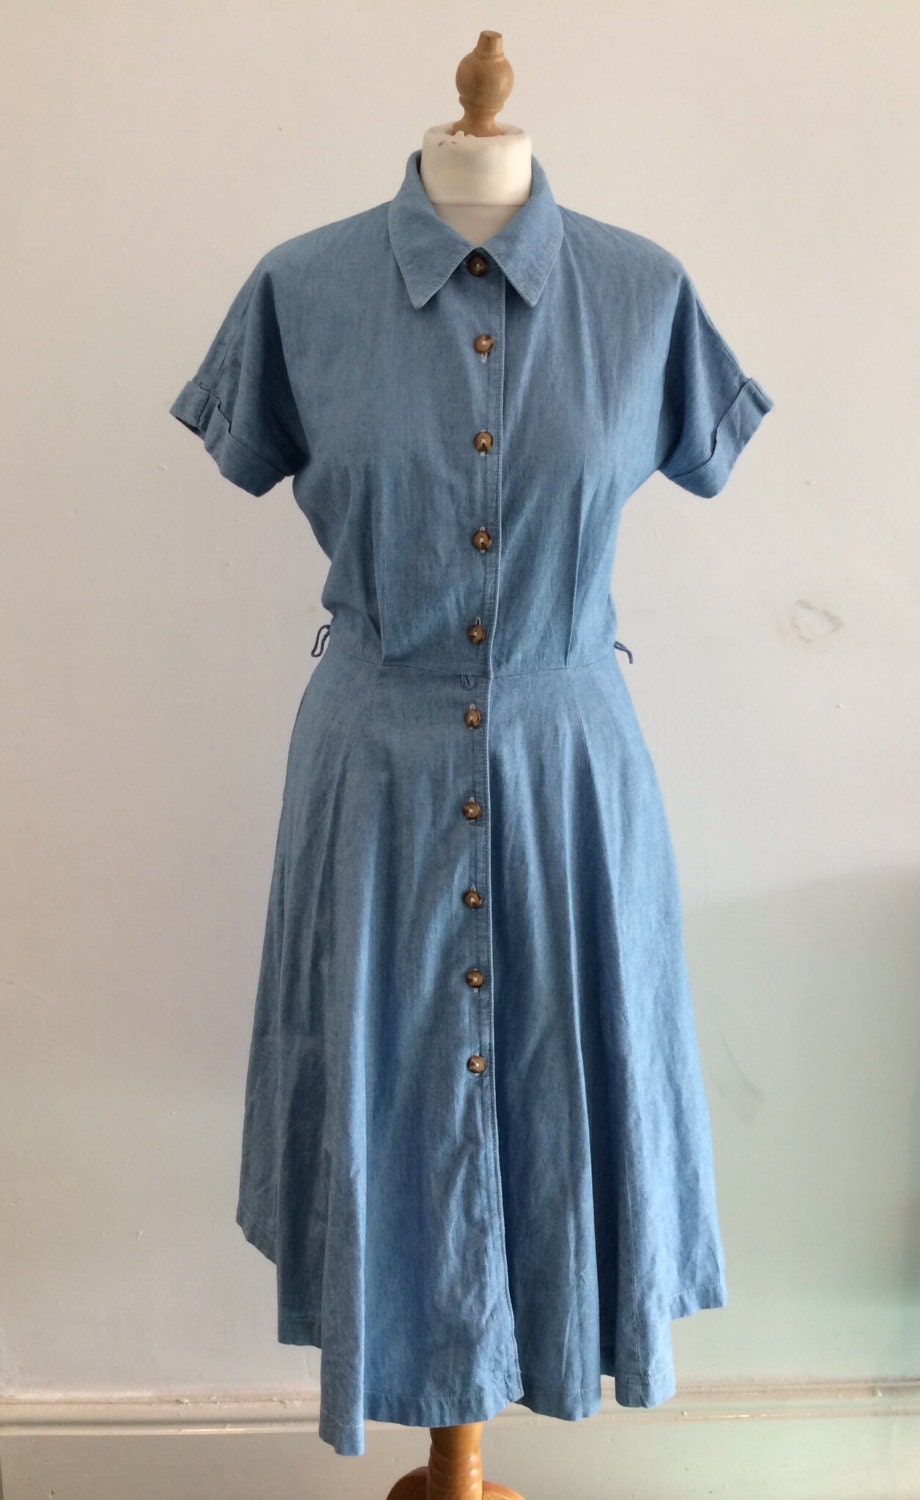 Vintage 1980s Light Blue Chambray Cotton Summer Sun Dress